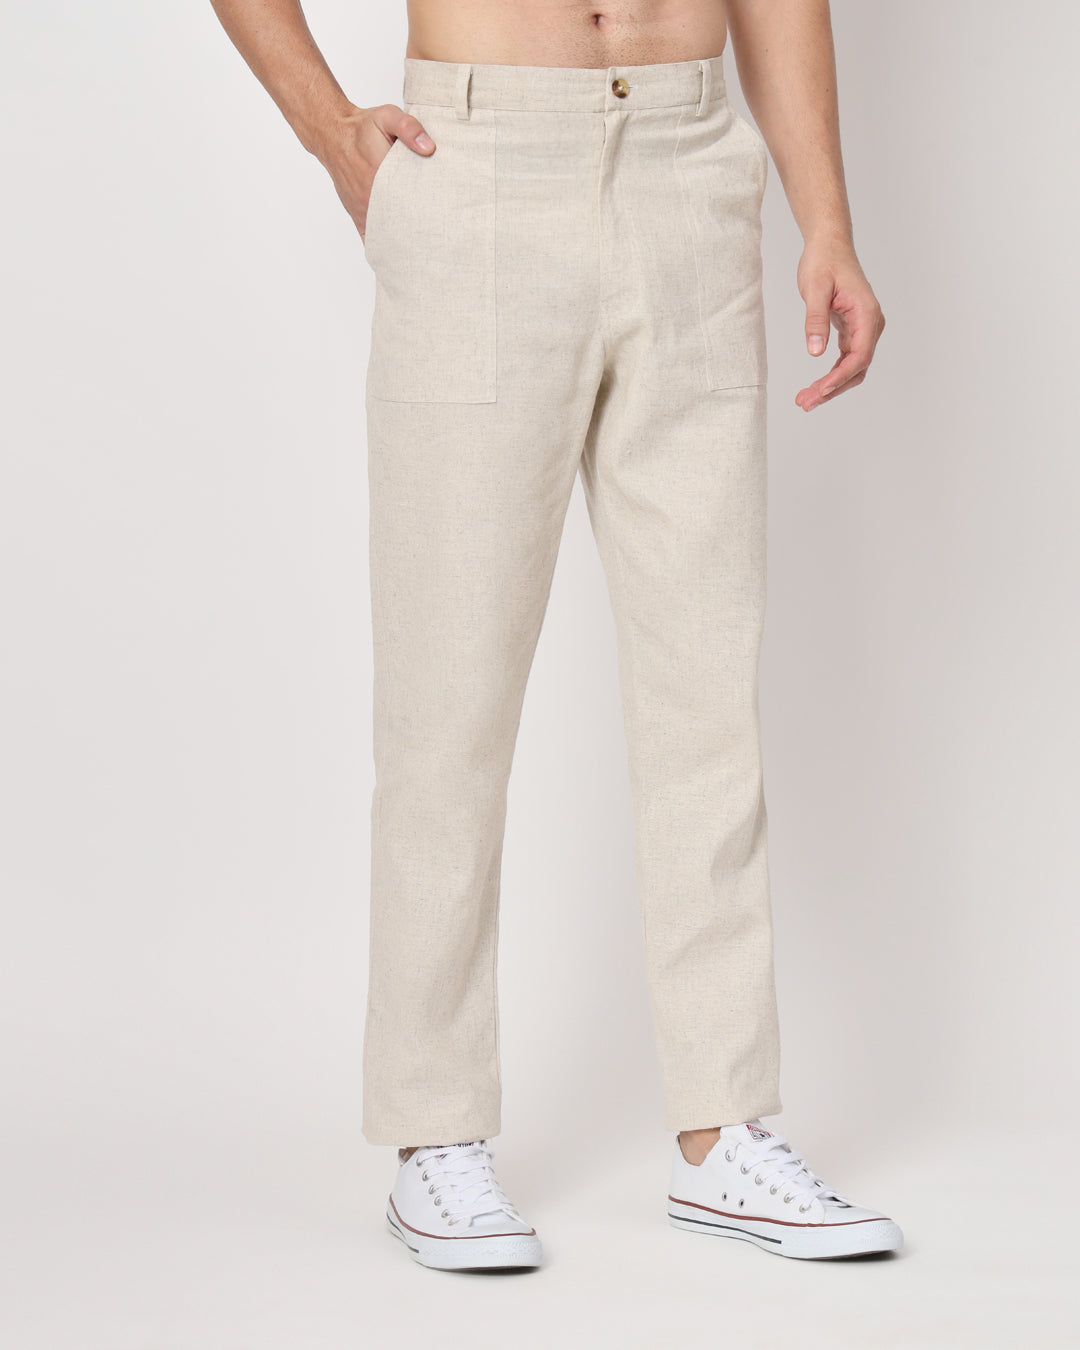 Combo : Comfy Ease & Cargo Beige Men's Pants & Shorts  - Set of 2